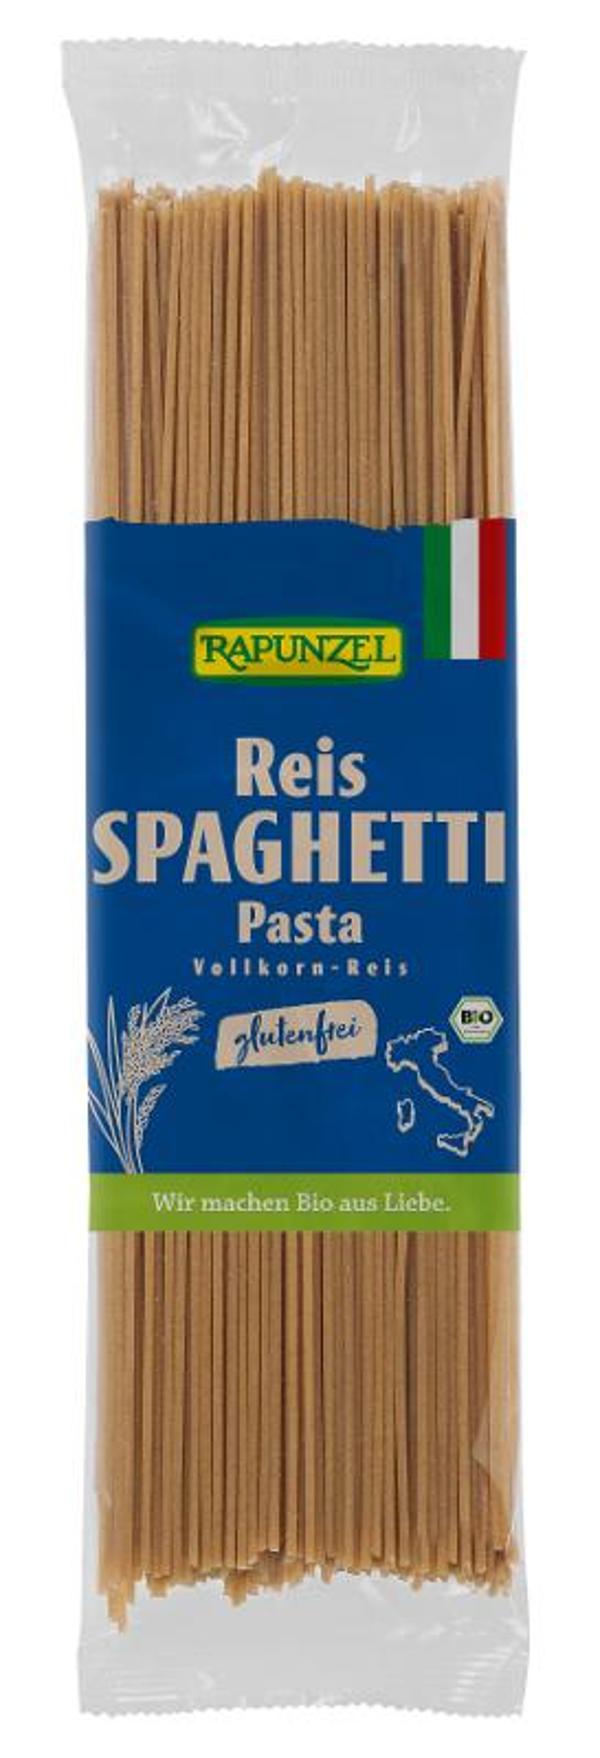 Produktfoto zu Reis Spaghetti glutenfrei